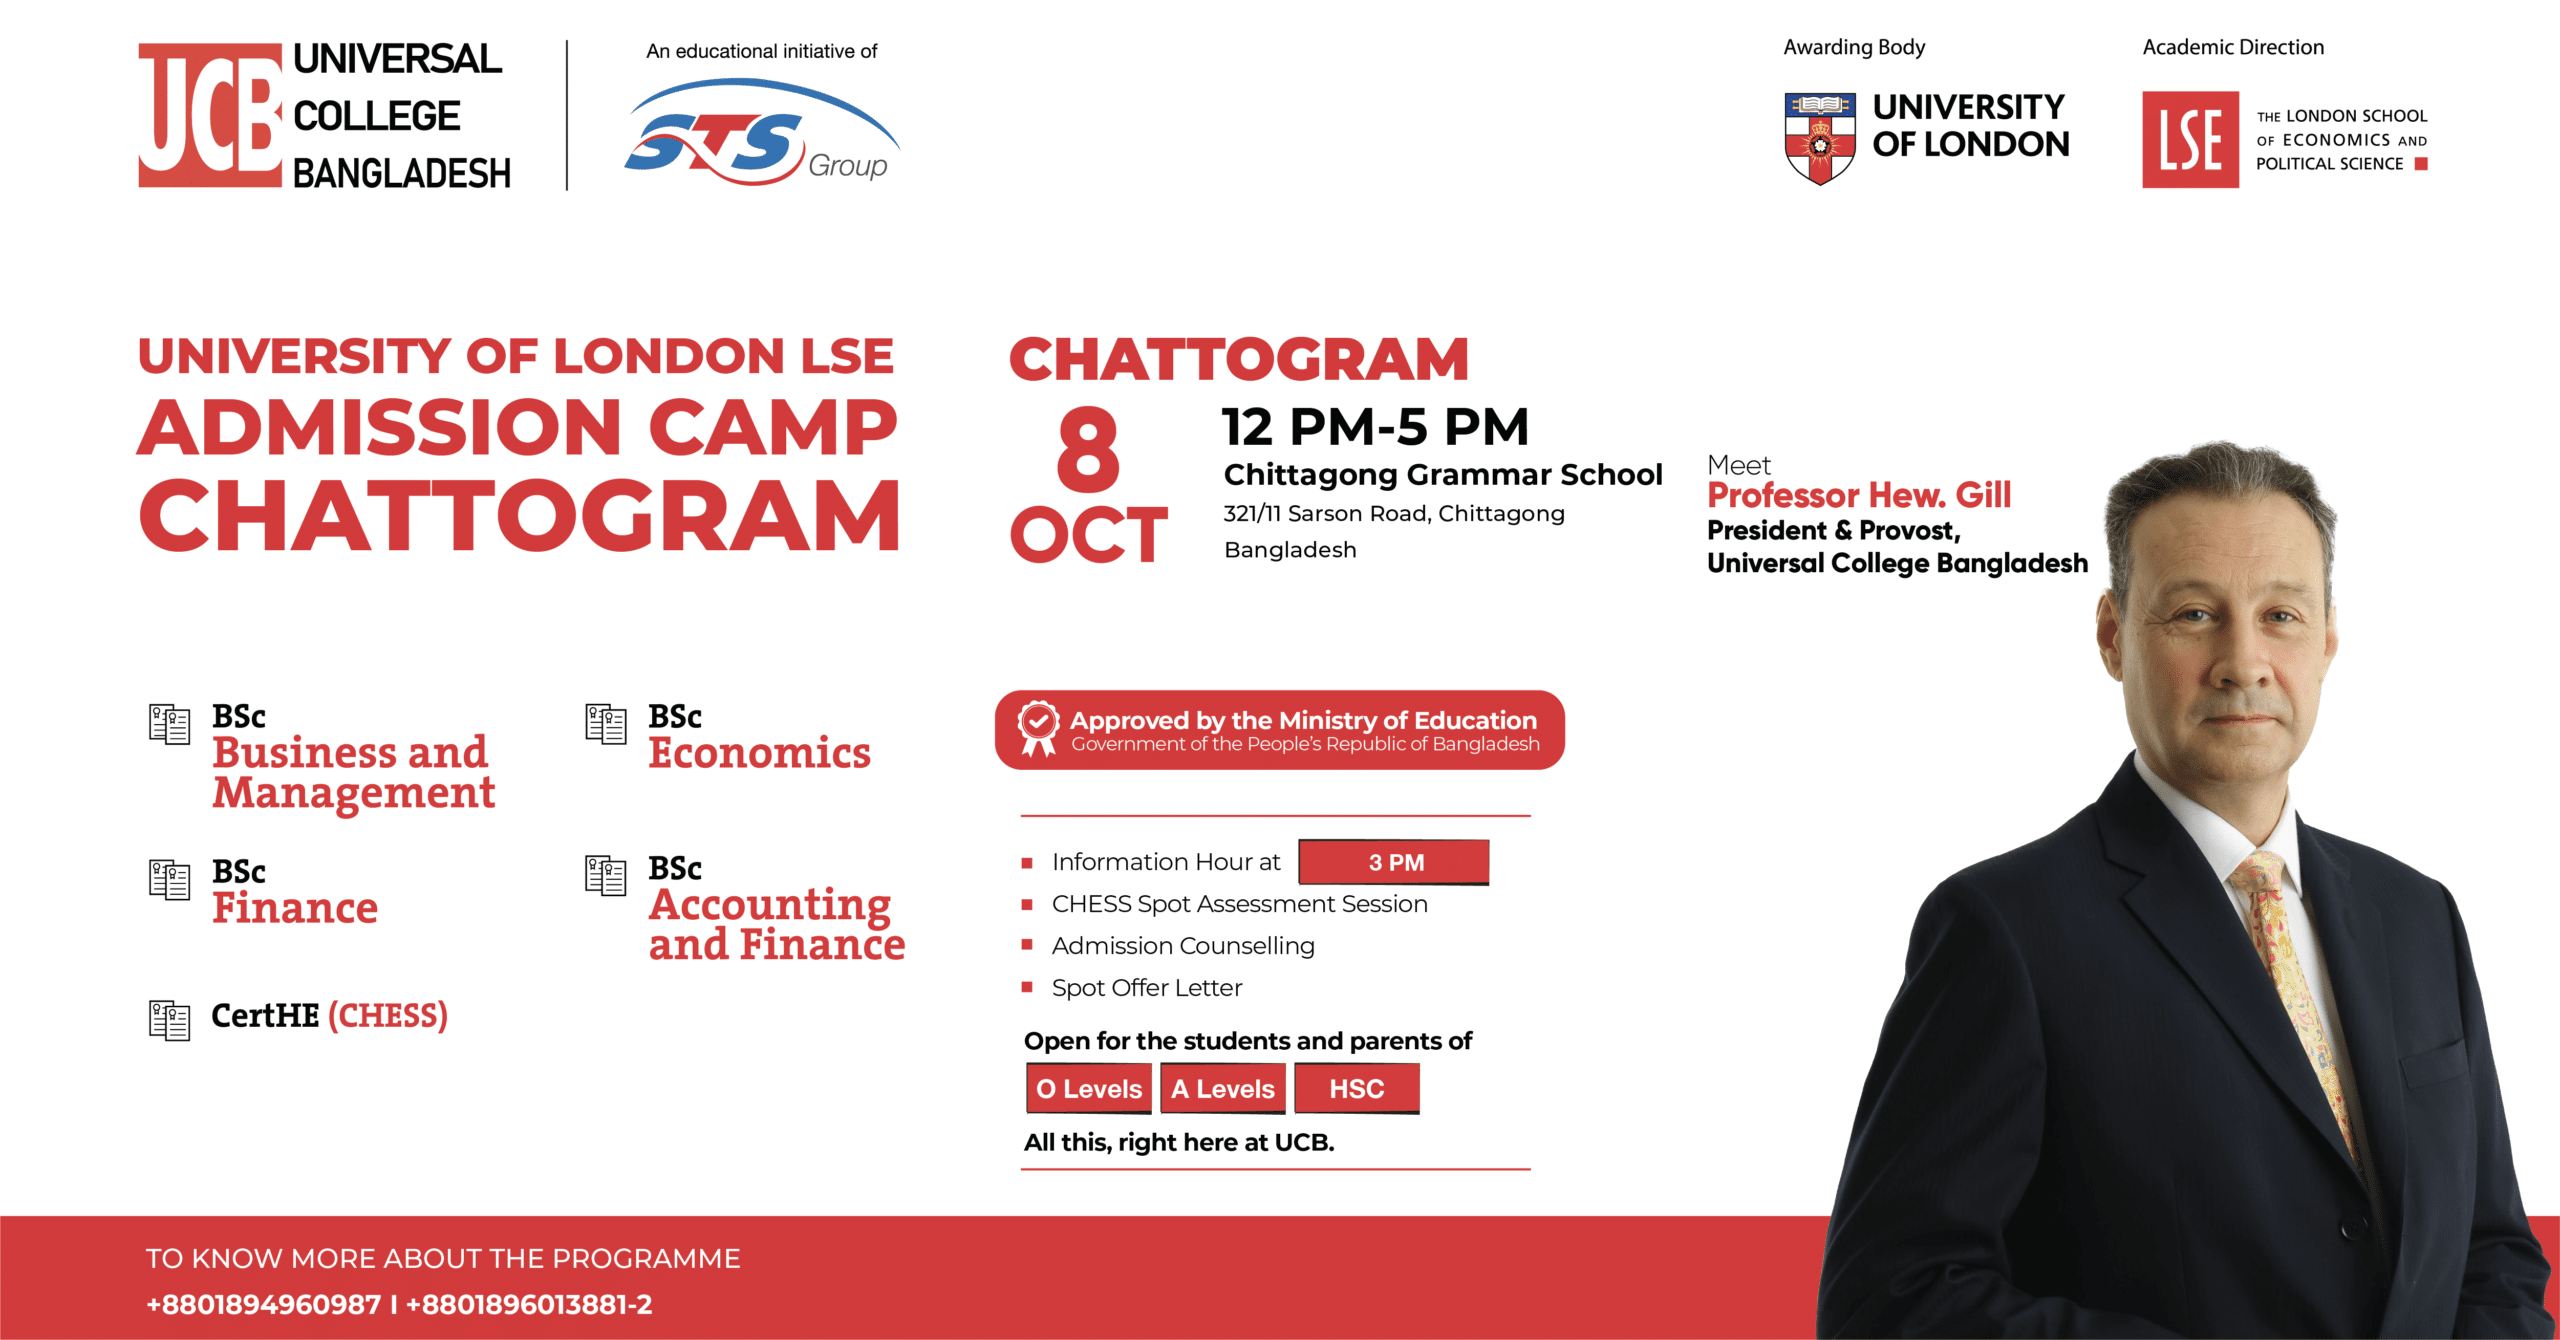 University of London LSE Admission Camp Chattogram